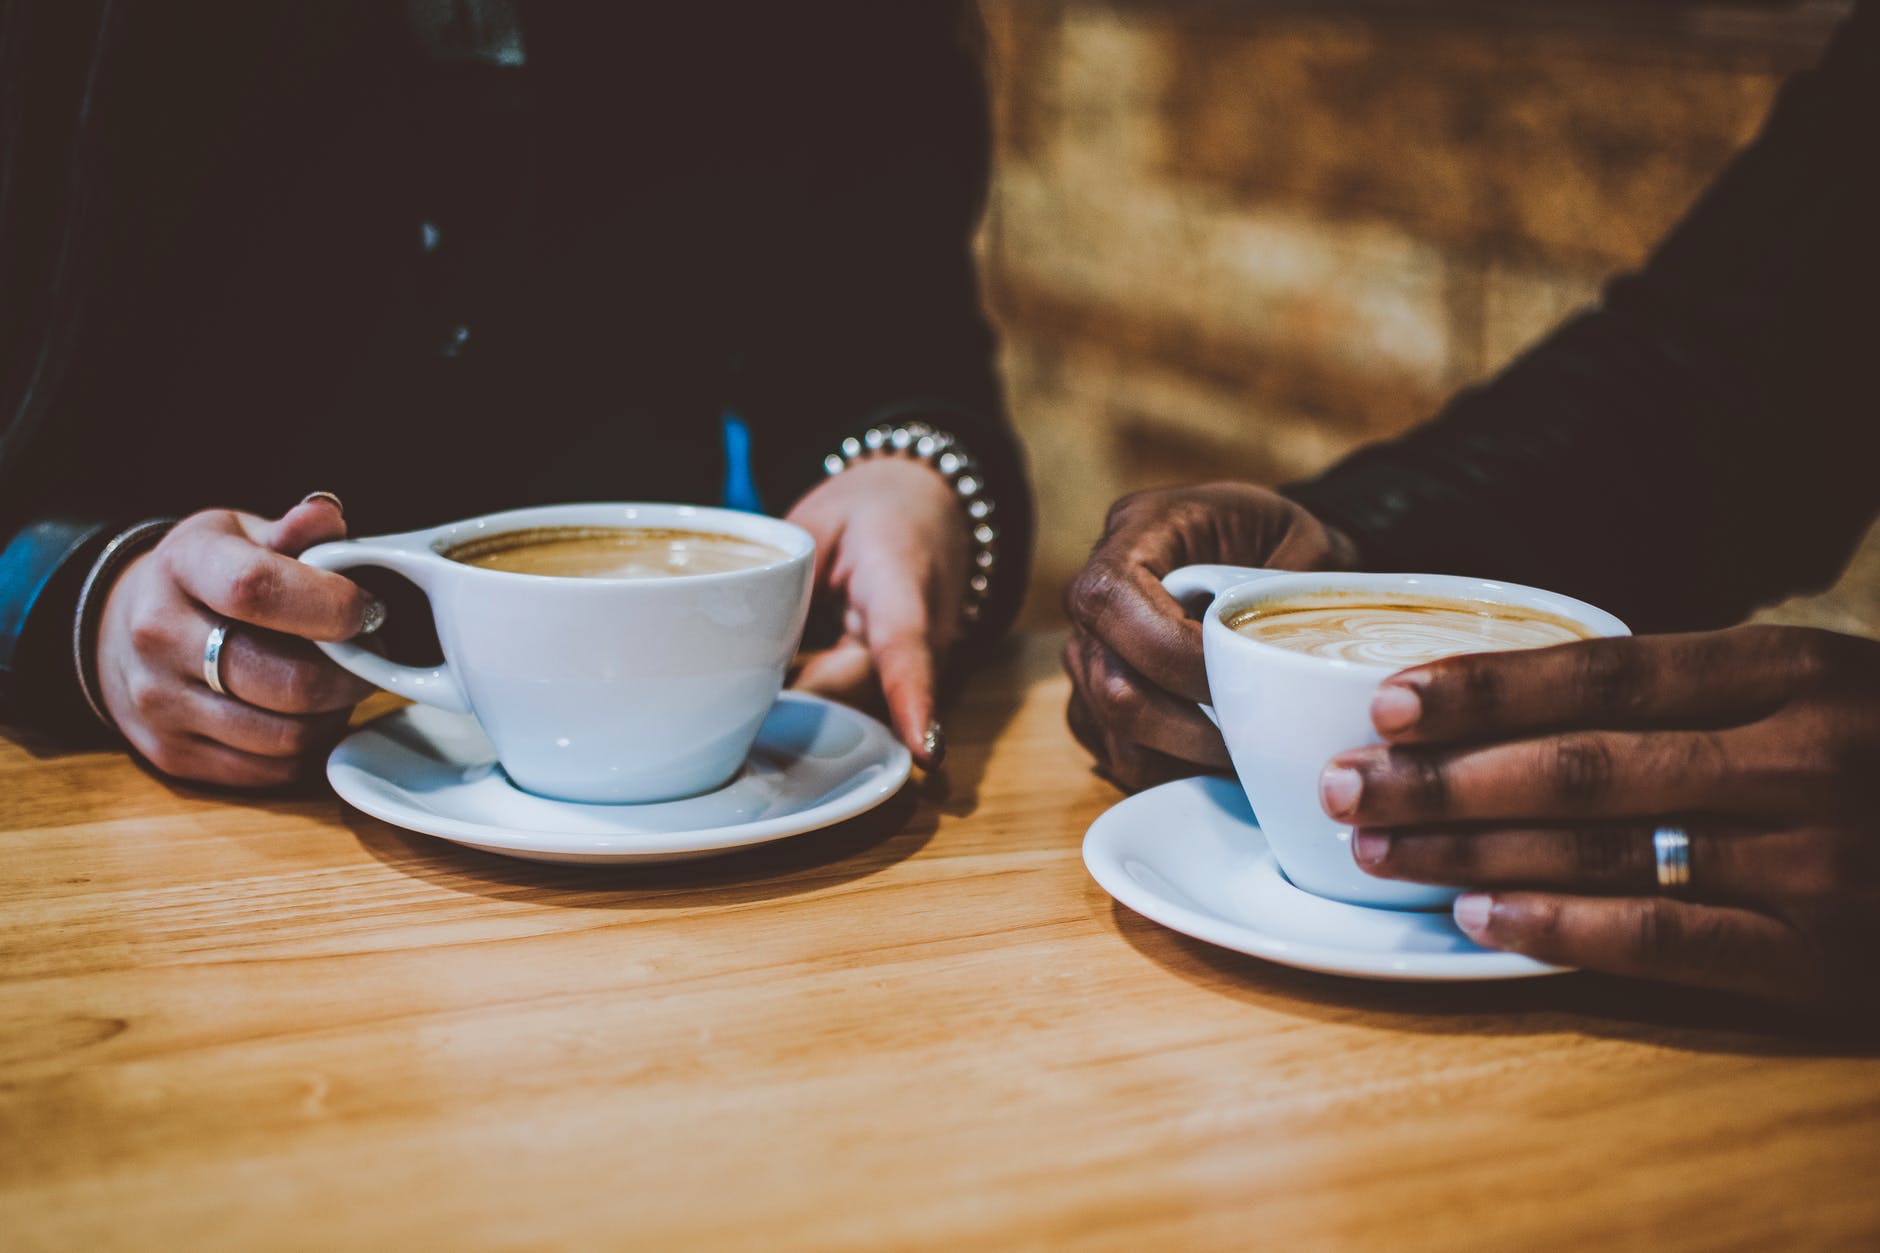 Two people drinking mugs of coffee